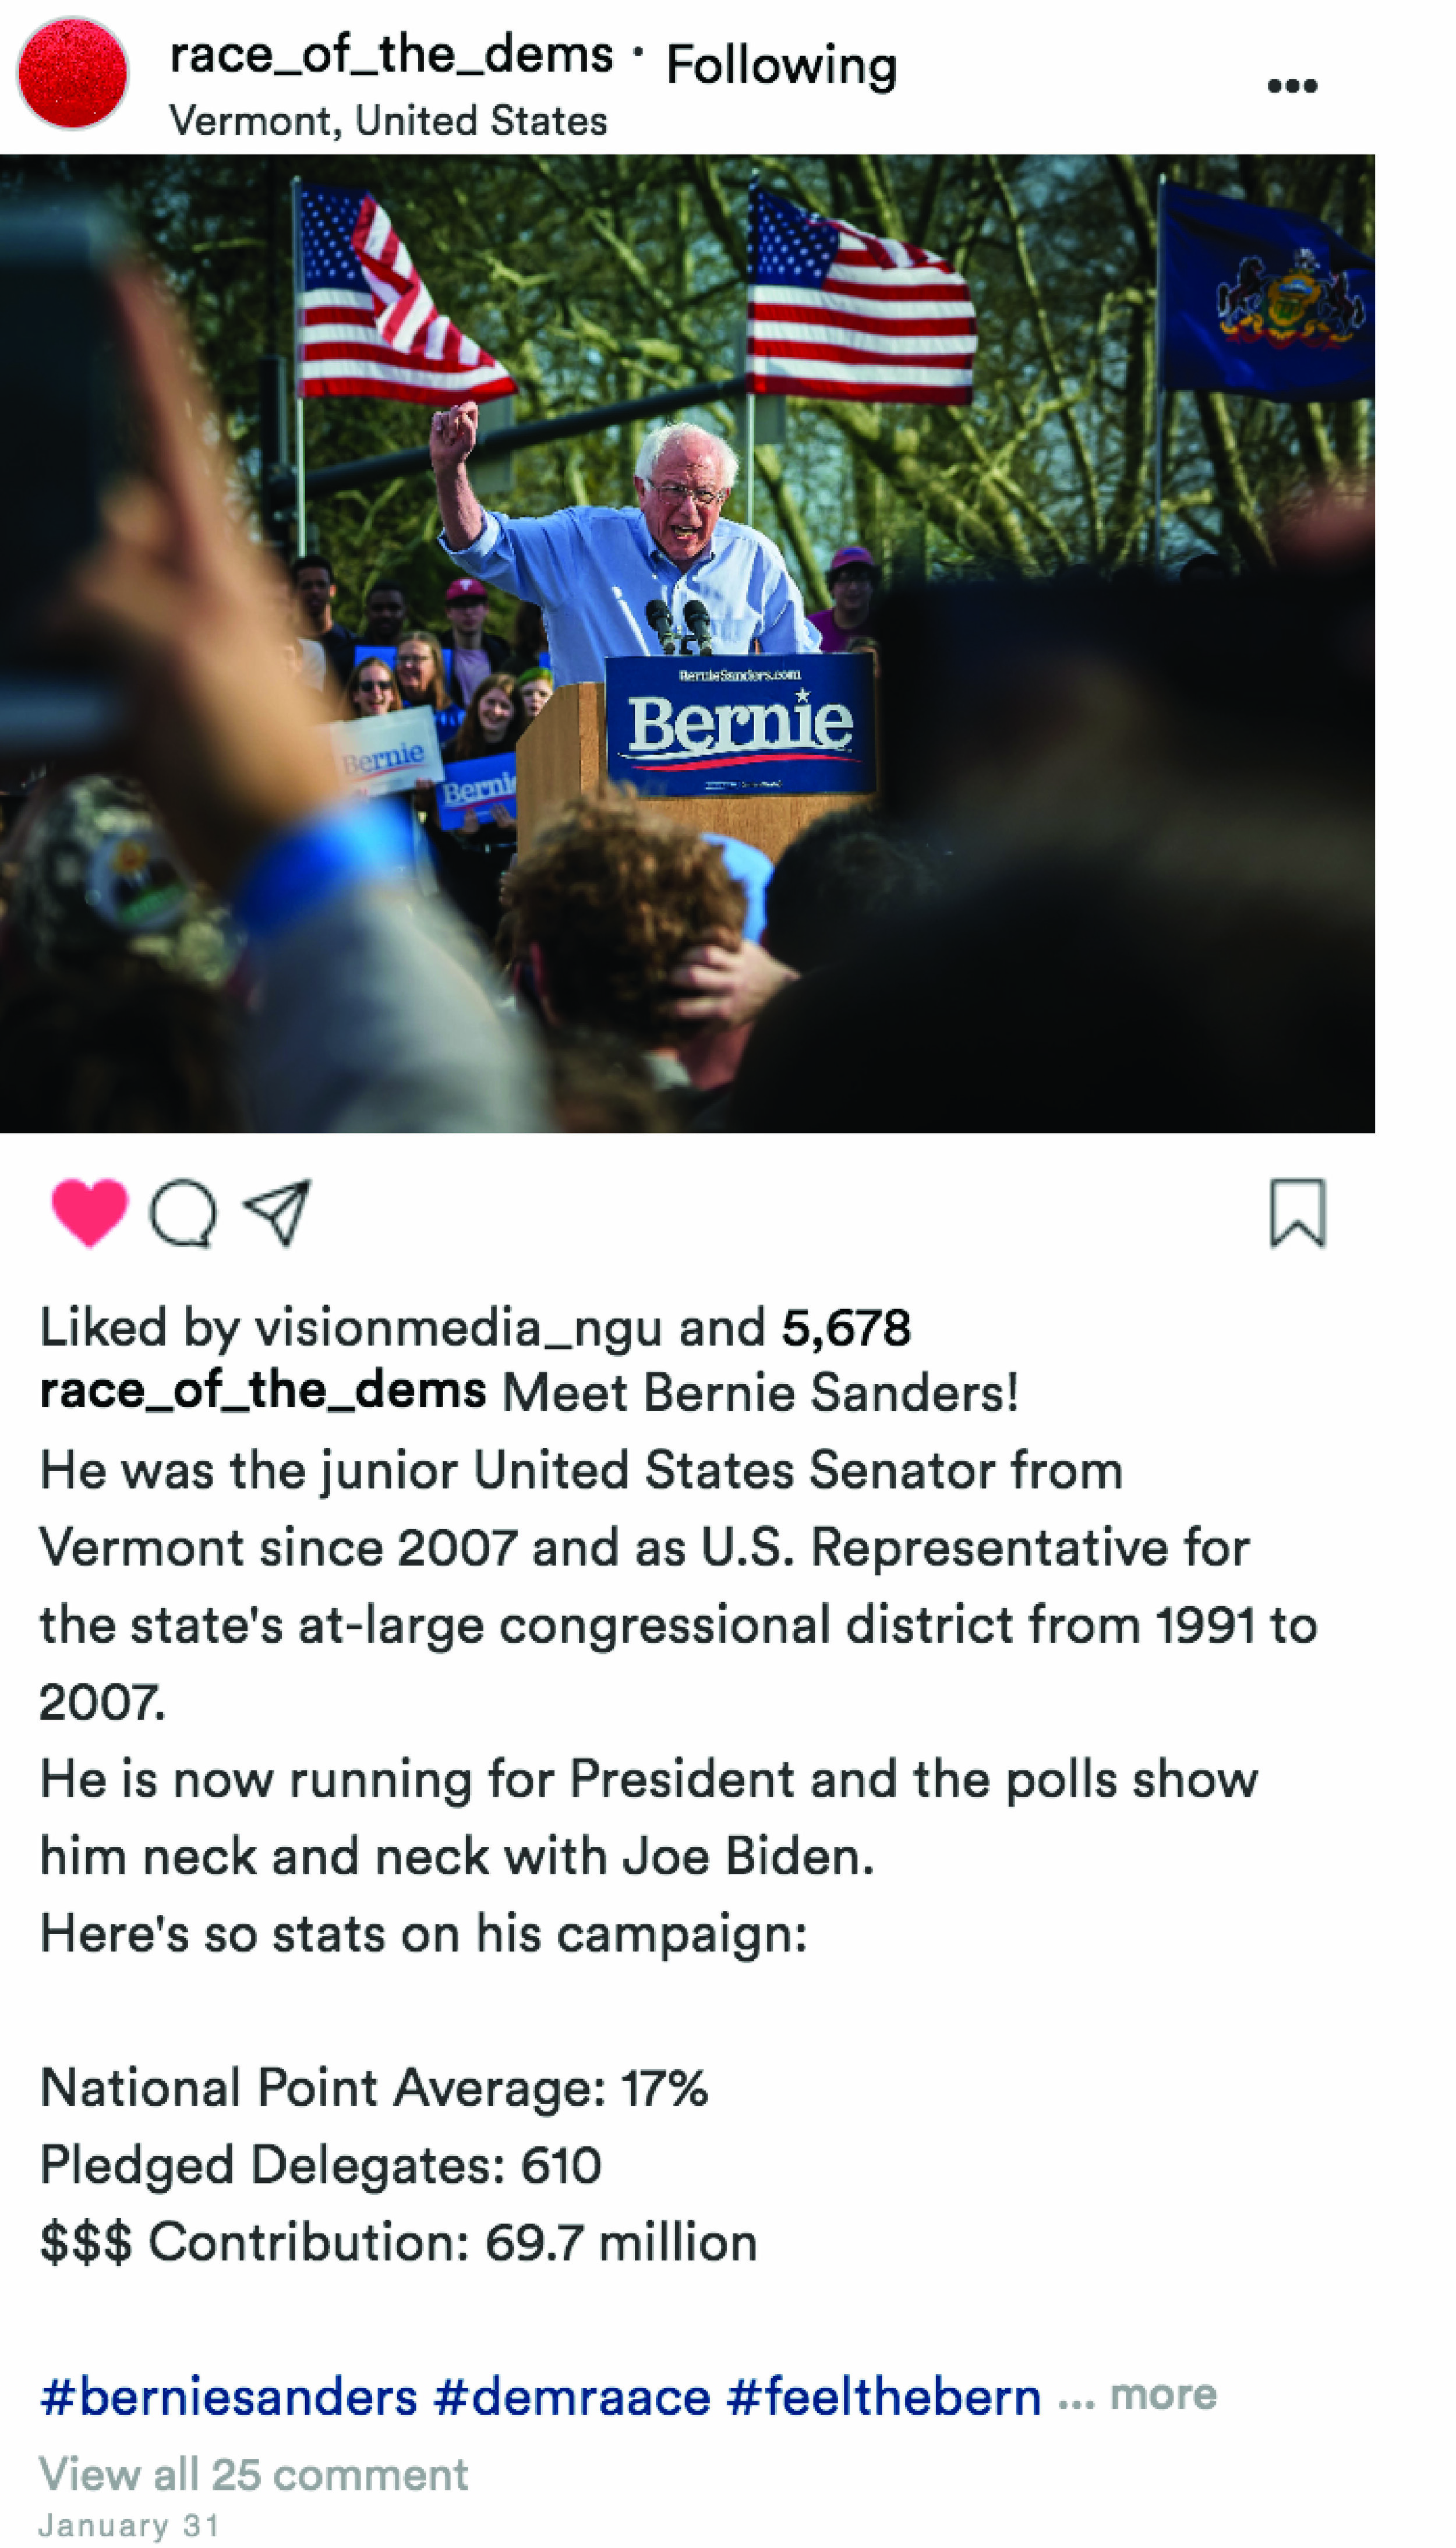 Mock Instagram post about Bernie Sanders.Photo courtesy of Unsplash